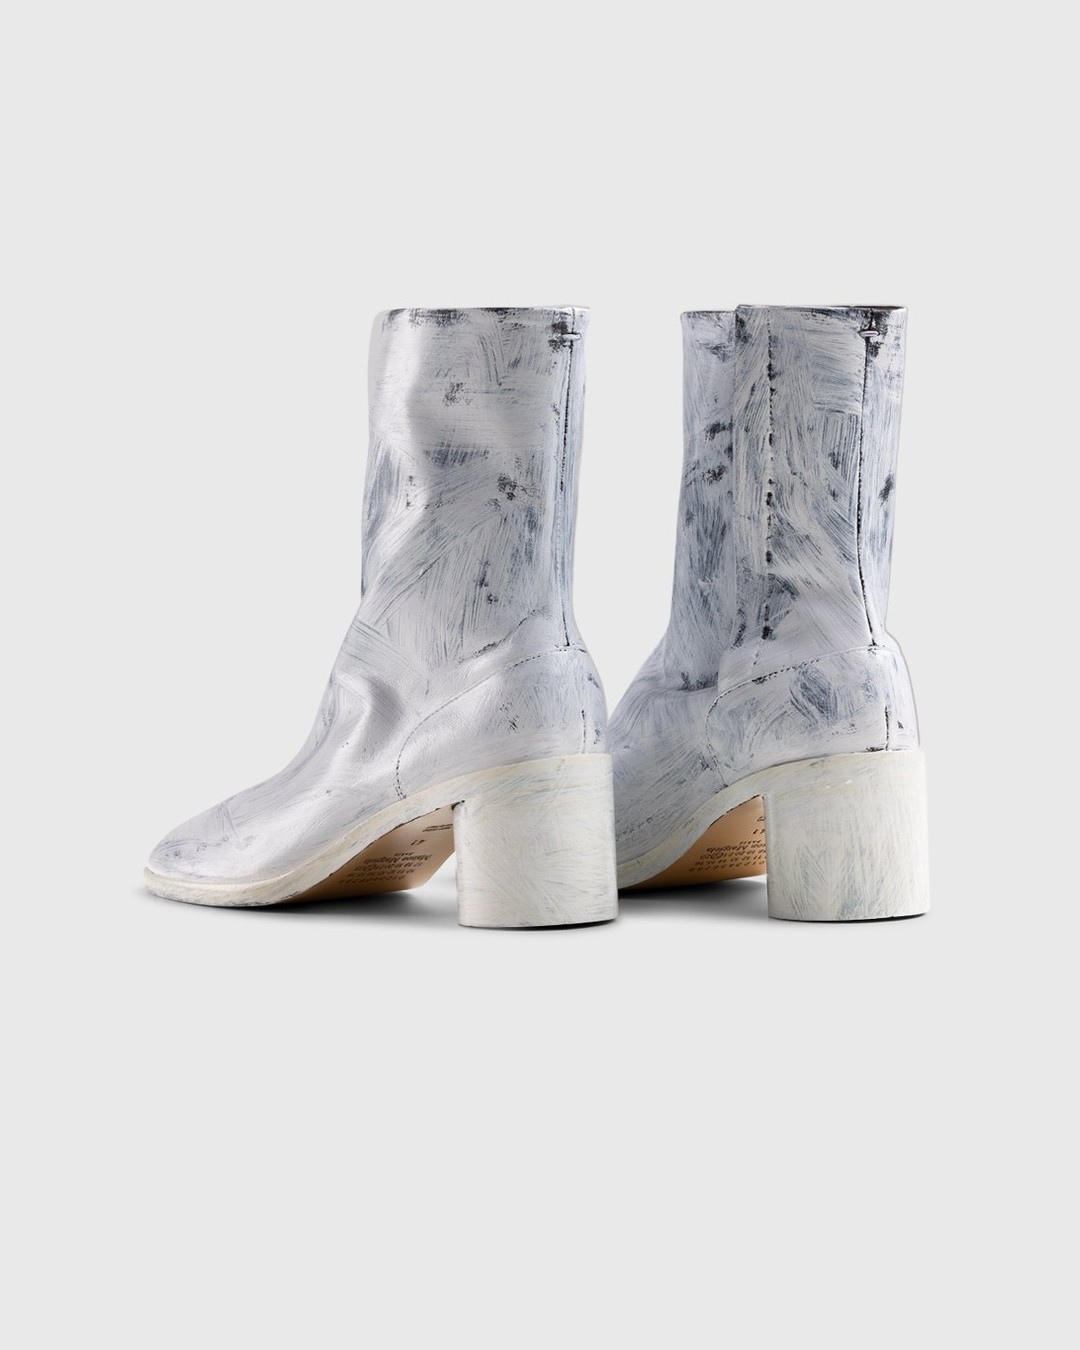 Maison Margiela – Tabi Bianchetto Chelsea Boots White - Heels - White - Image 3